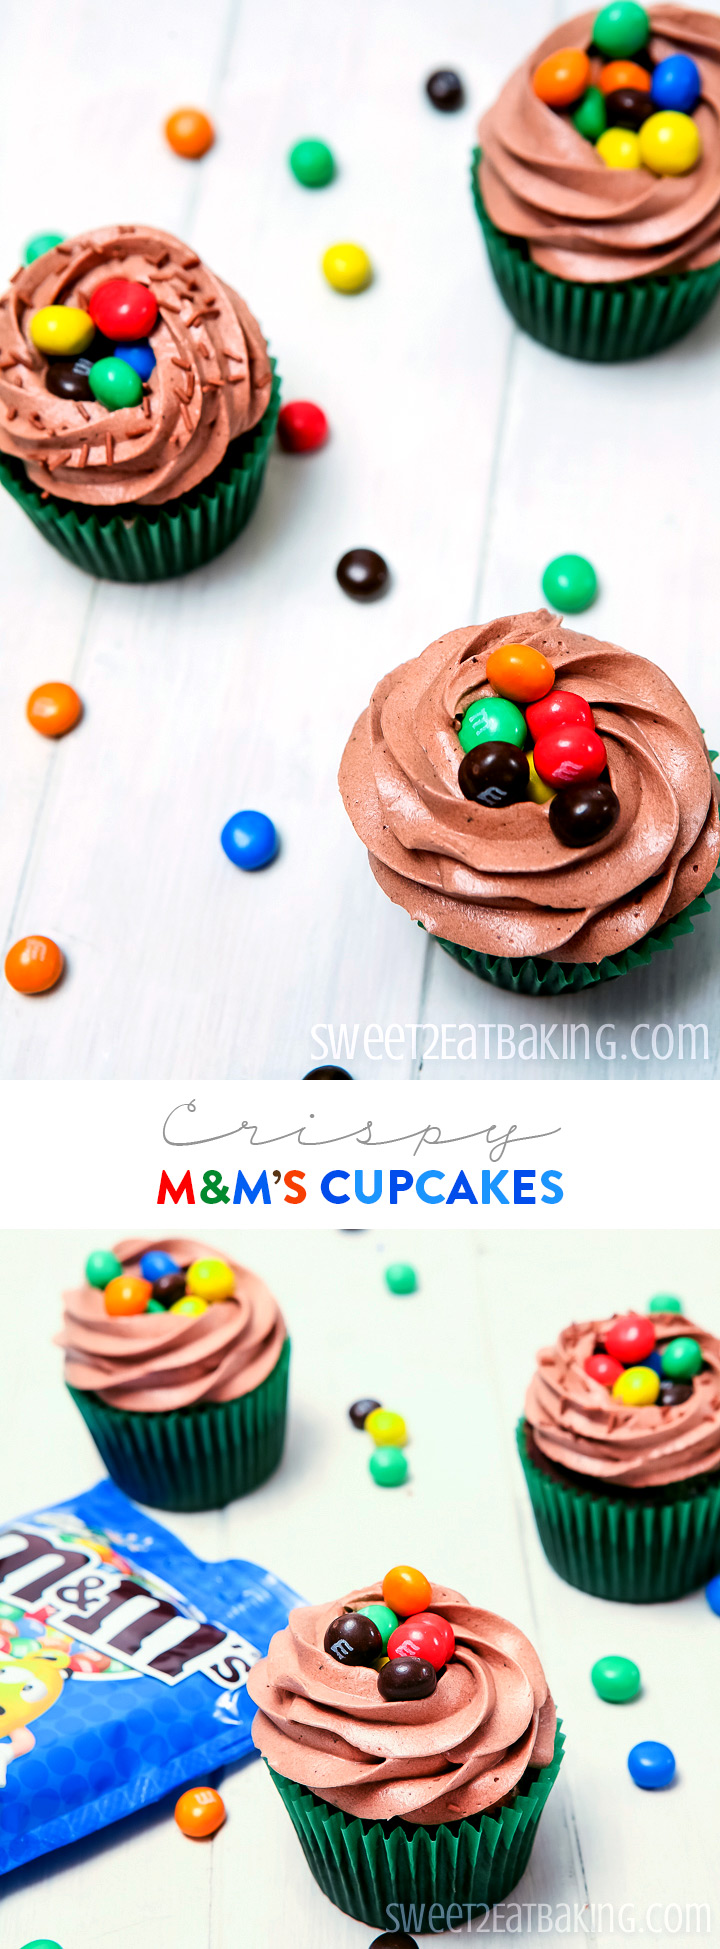 Crispy M&M's Cupcakes Recipe by Sweet2EatBaking.com